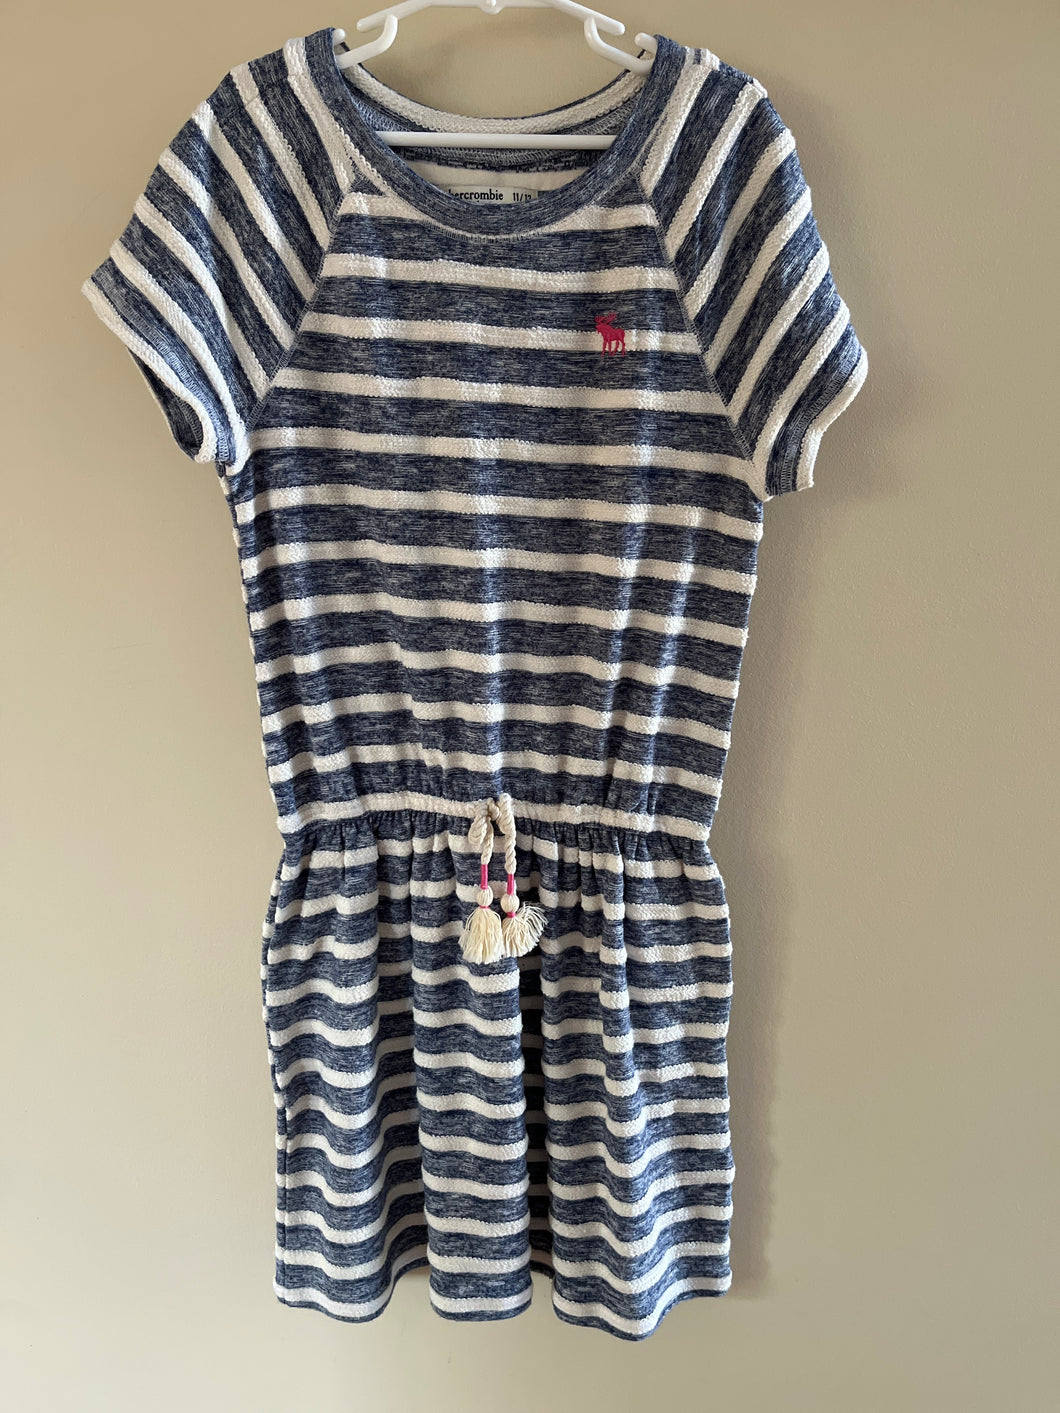 Abercrombie kids size 11/12 blue/cream striped dress 11